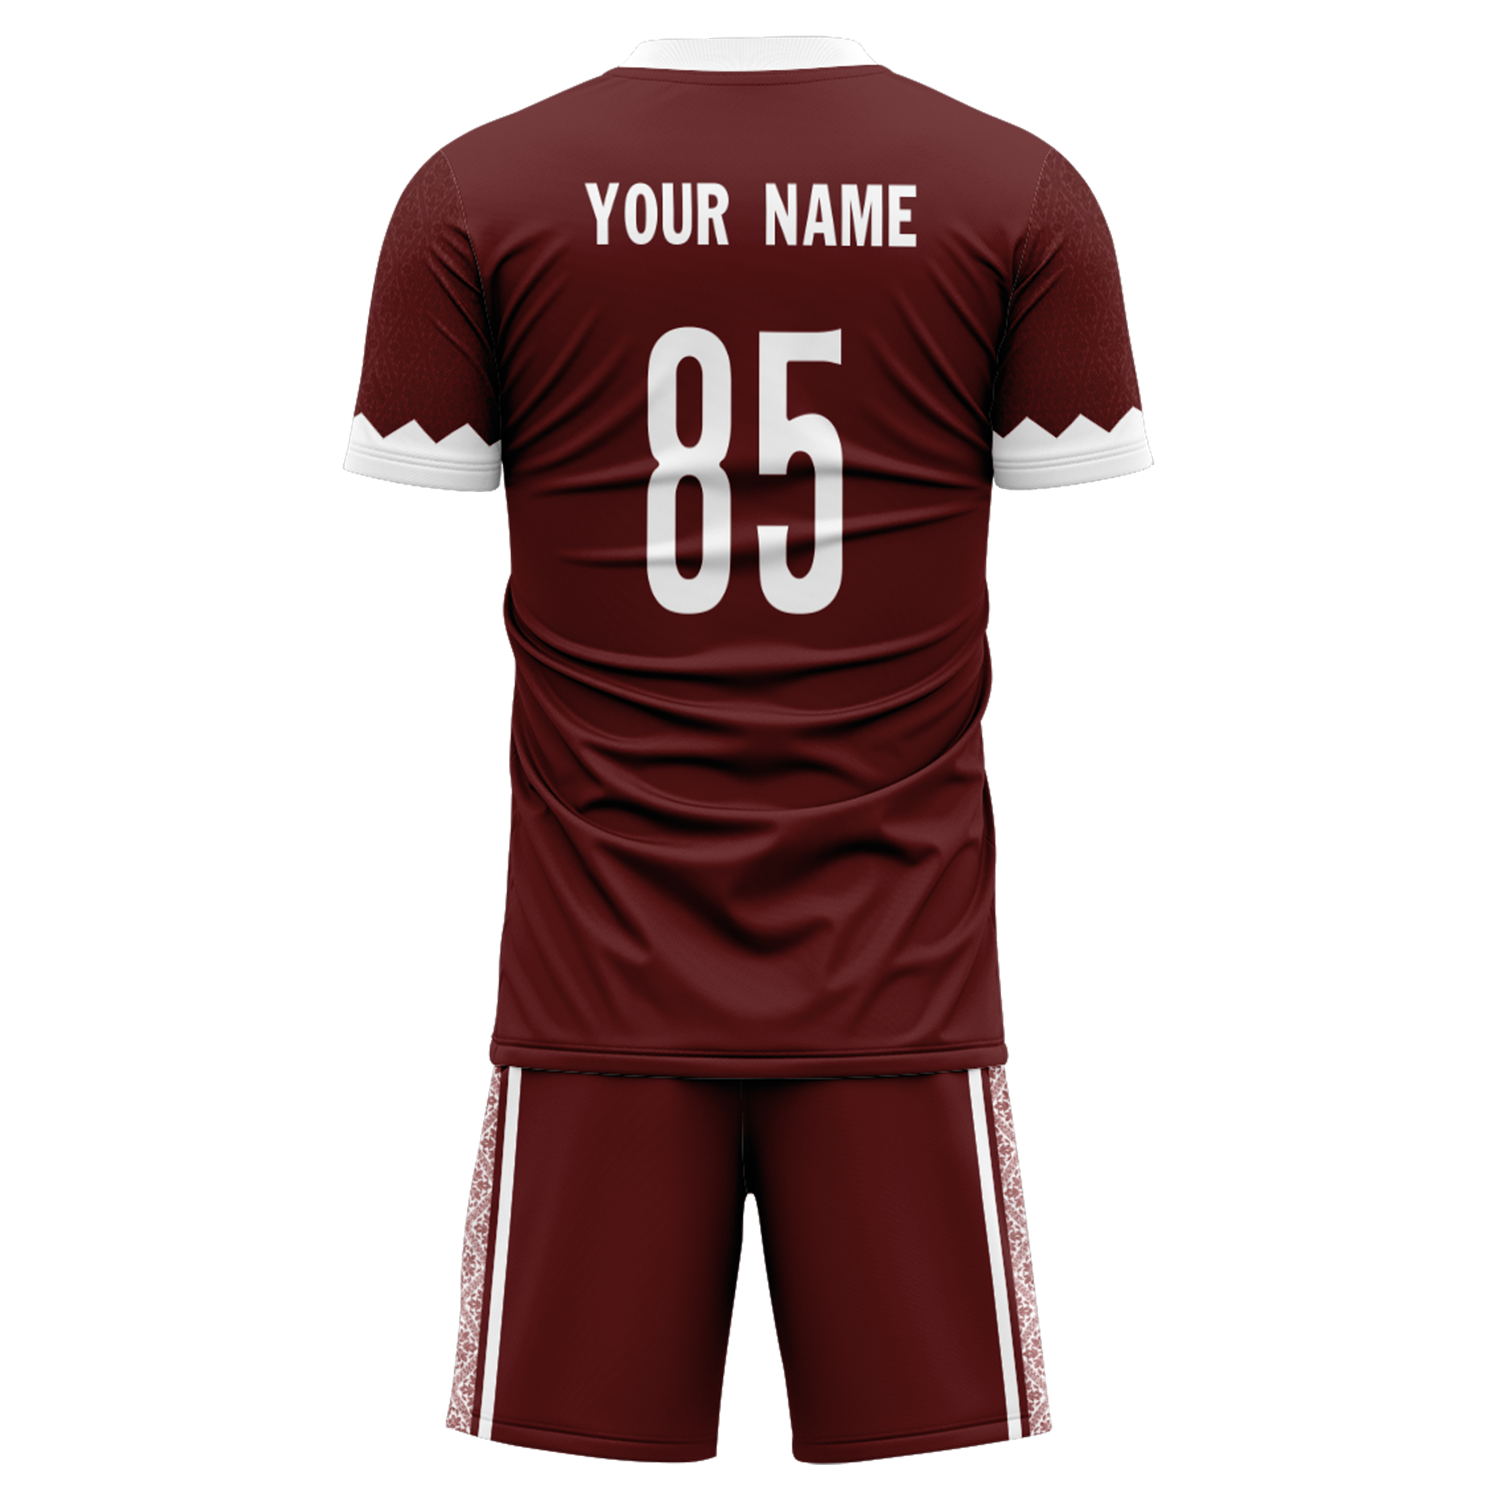 Custom Qatar Team Football Suits Personalized Design Print on Demand Soccer Jerseys